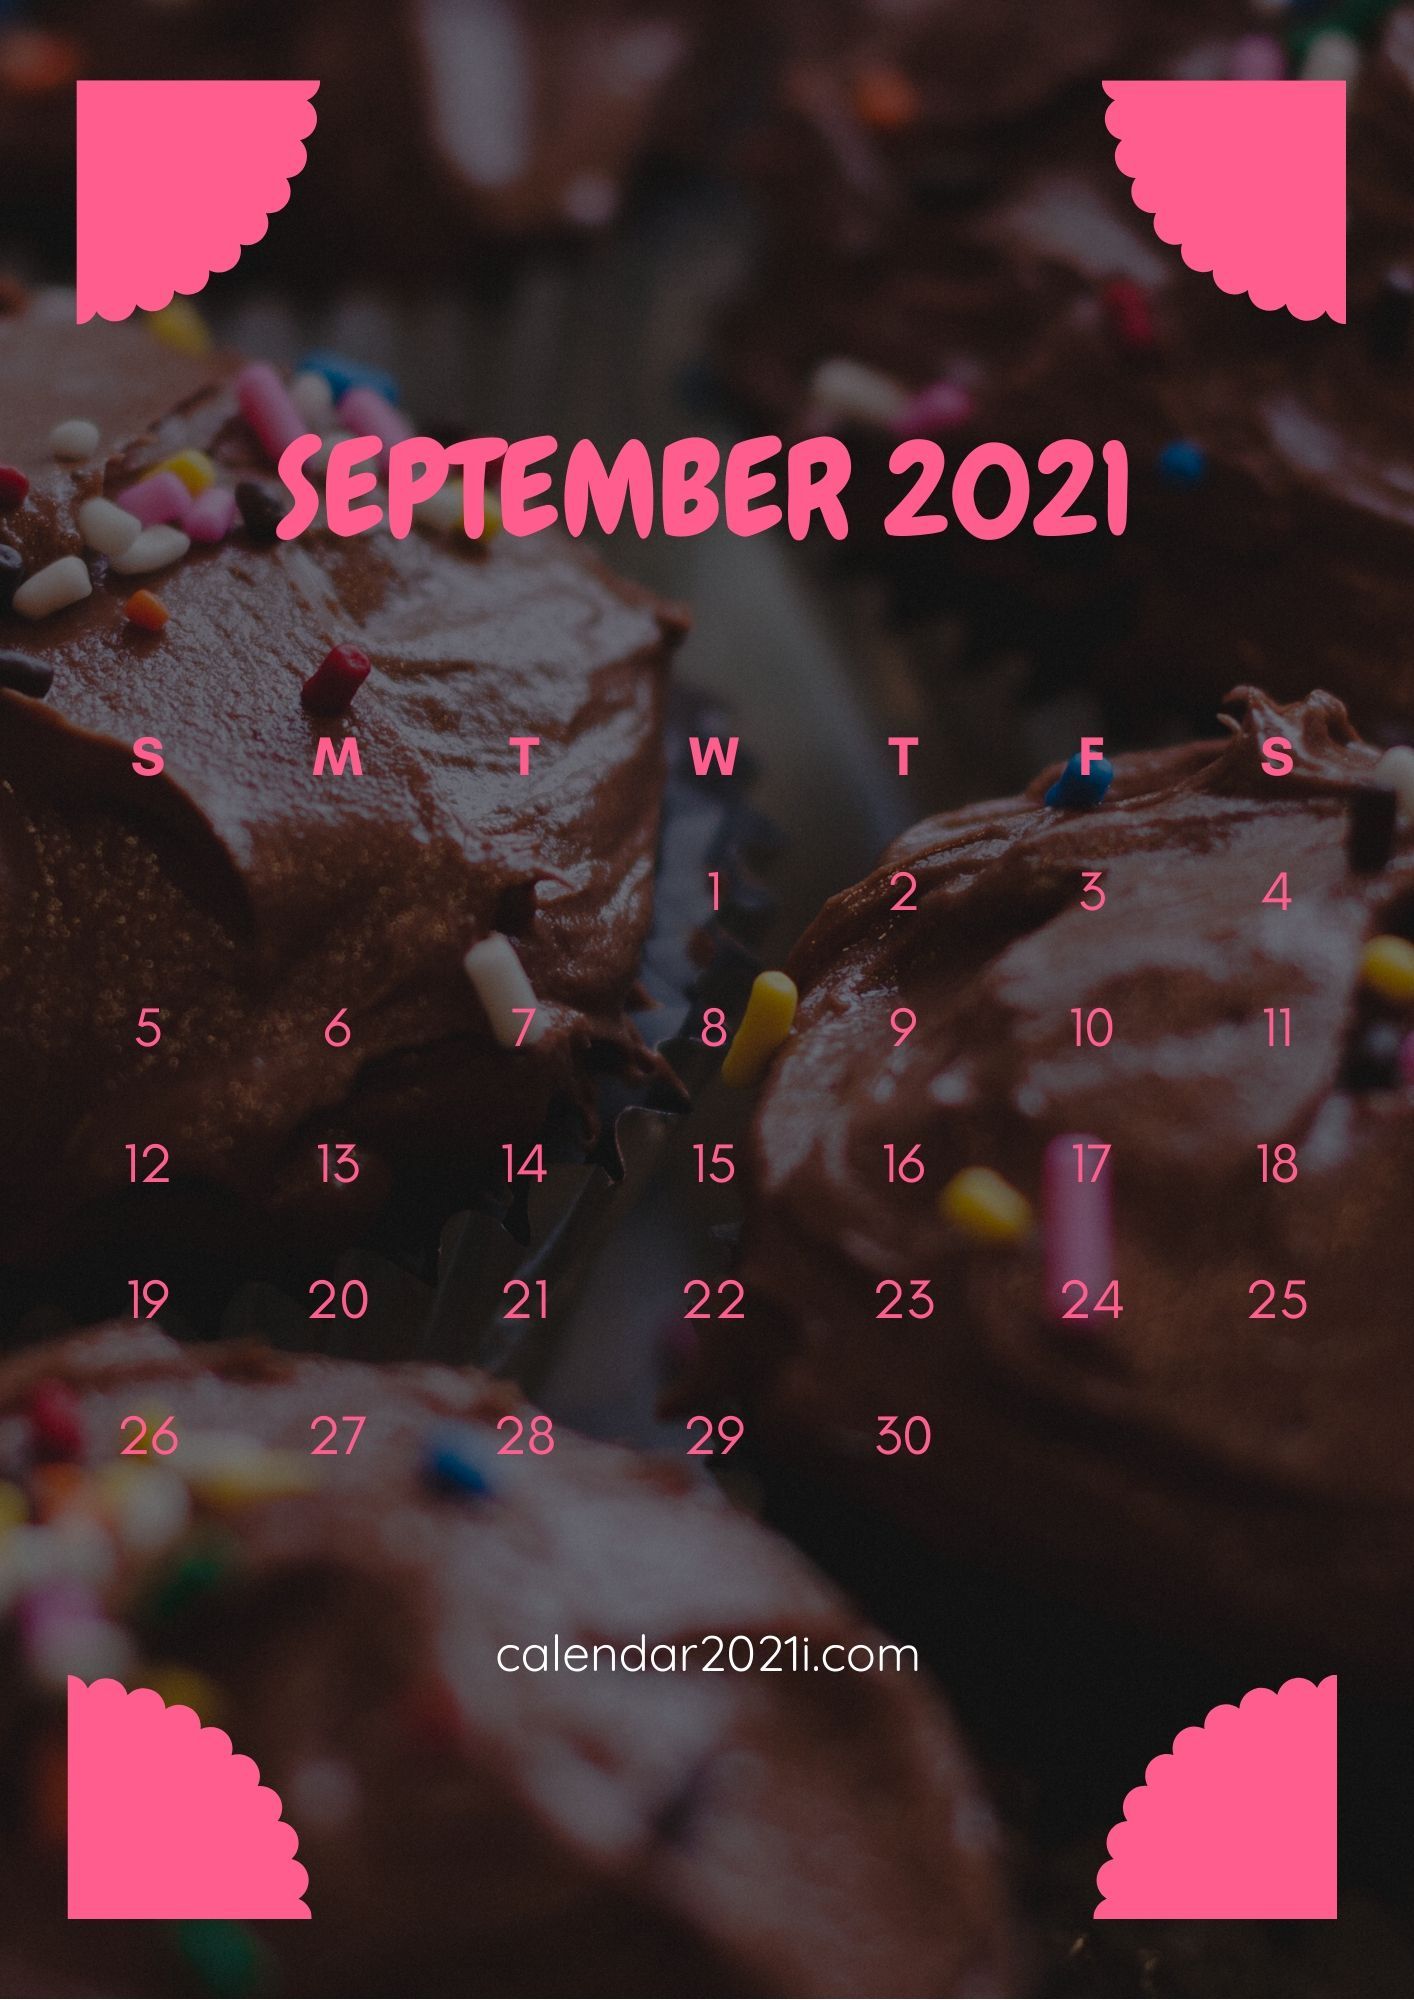 iPhone 2021 Calendar HD Wallpapers Calendar 2021 in 2021